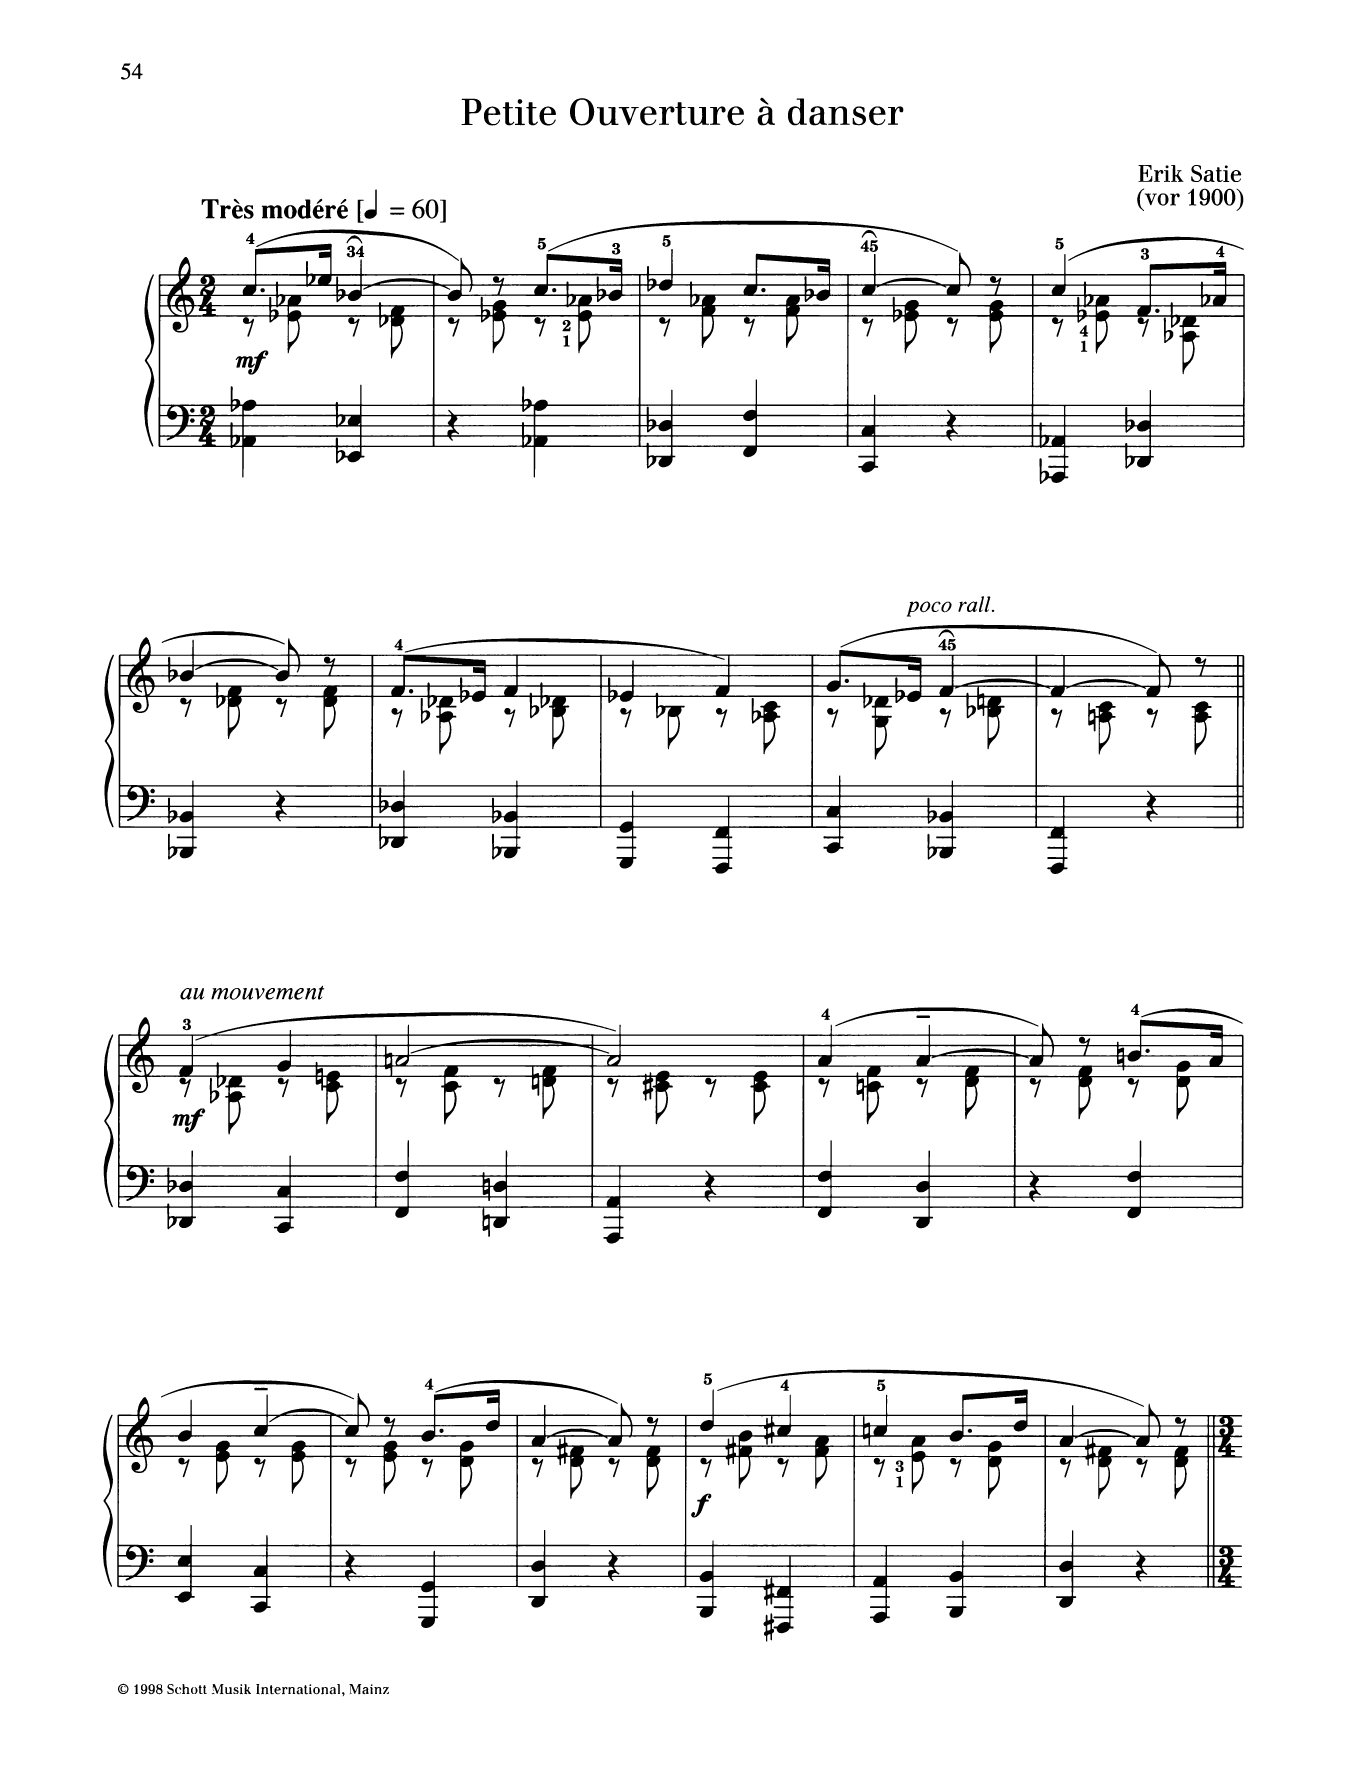 Erik Satie Petite Ouverture a Danser Sheet Music Notes & Chords for Piano Solo - Download or Print PDF